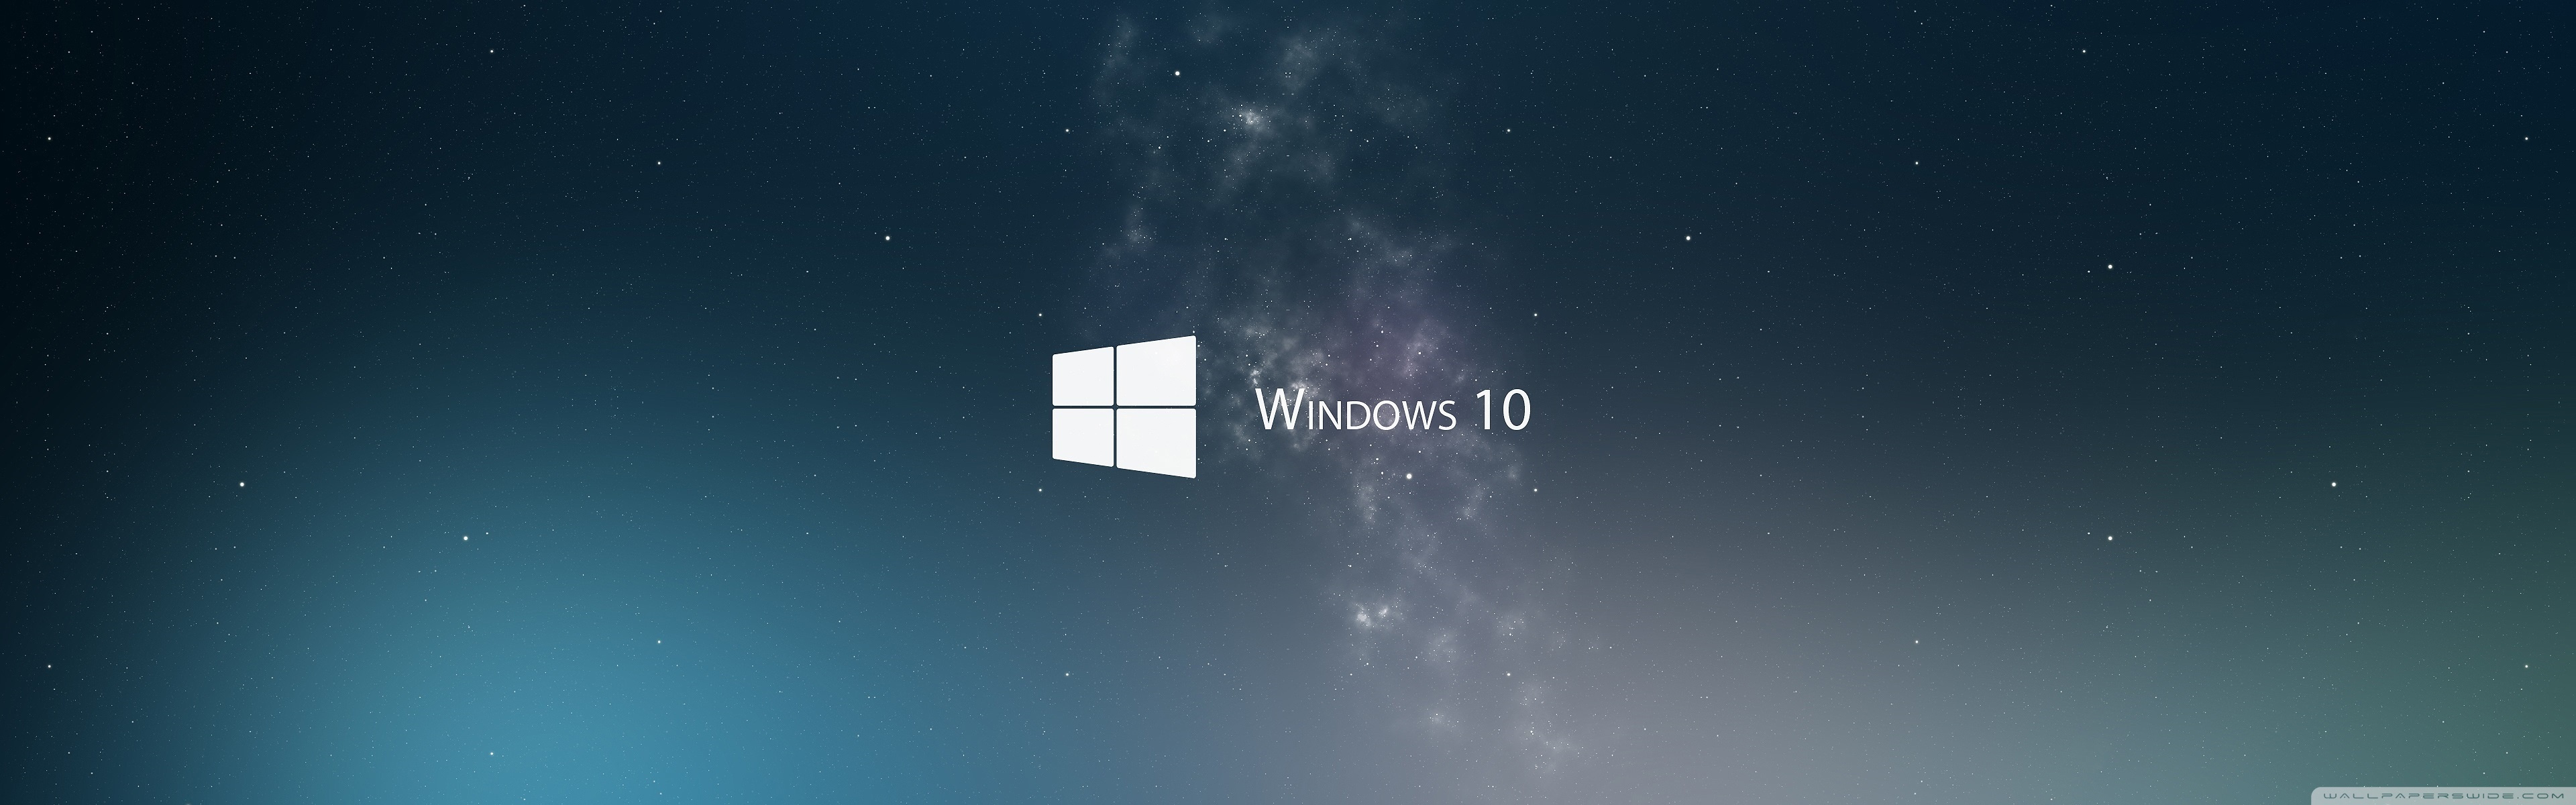 Windows 10 Ultra HD Desktop Background Wallpaper for: Widescreen & UltraWide Desktop & Laptop, Multi Display, Dual Monitor, Tablet